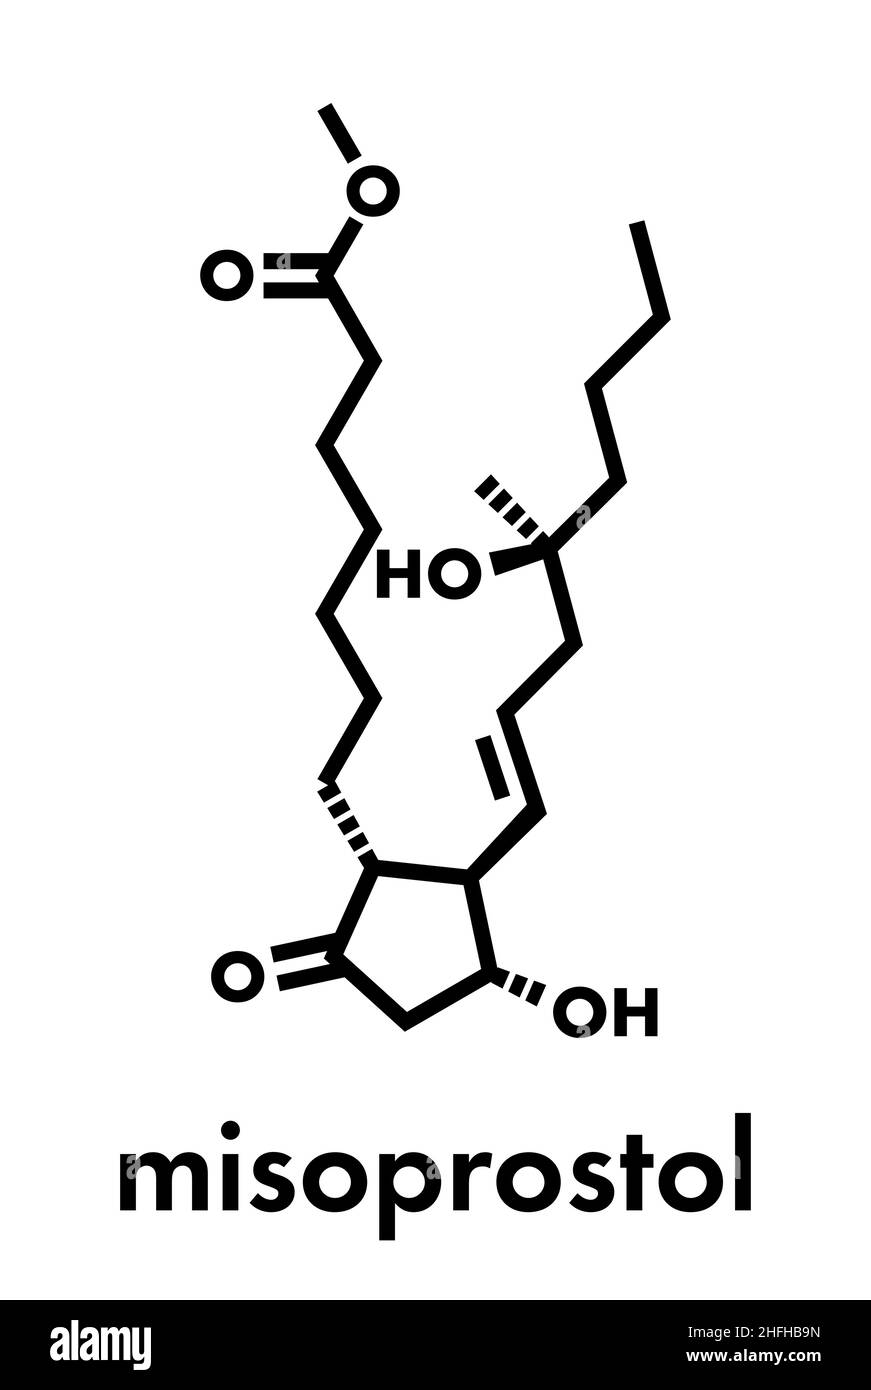 Misoprostol abortion inducing drug molecule. Prostaglandin E1 (PGE1) analogue also used to treat missed miscarriage, induce labor, etc. Skeletal formu Stock Vector